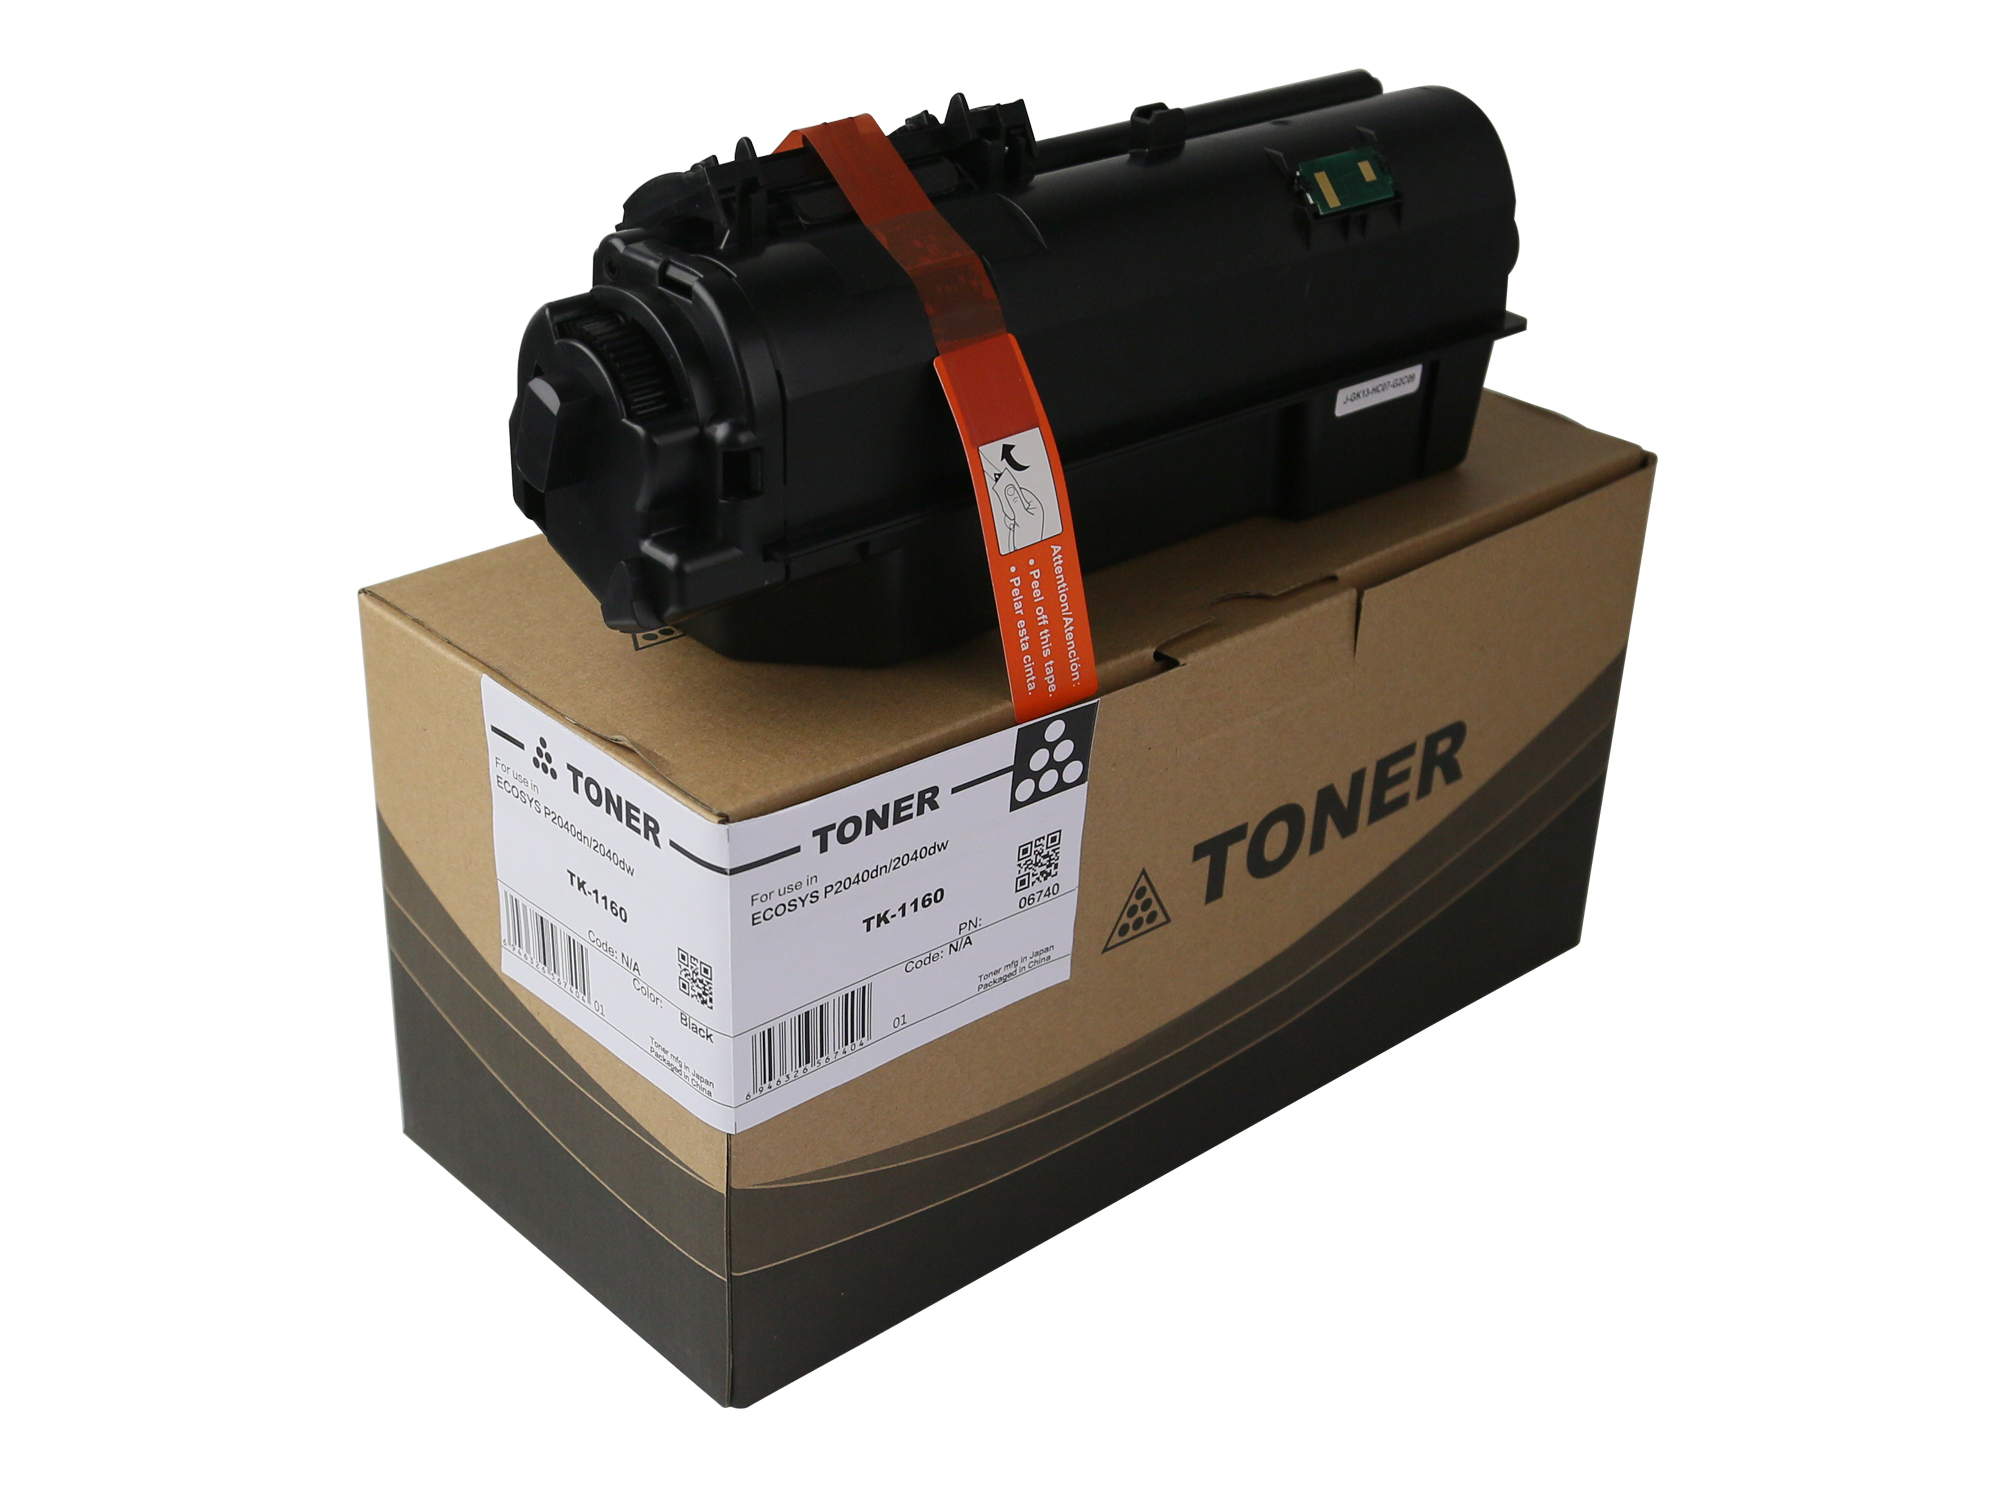 TK-1160 Toner Cartridge for Kyocera ECOSYS P2040dn